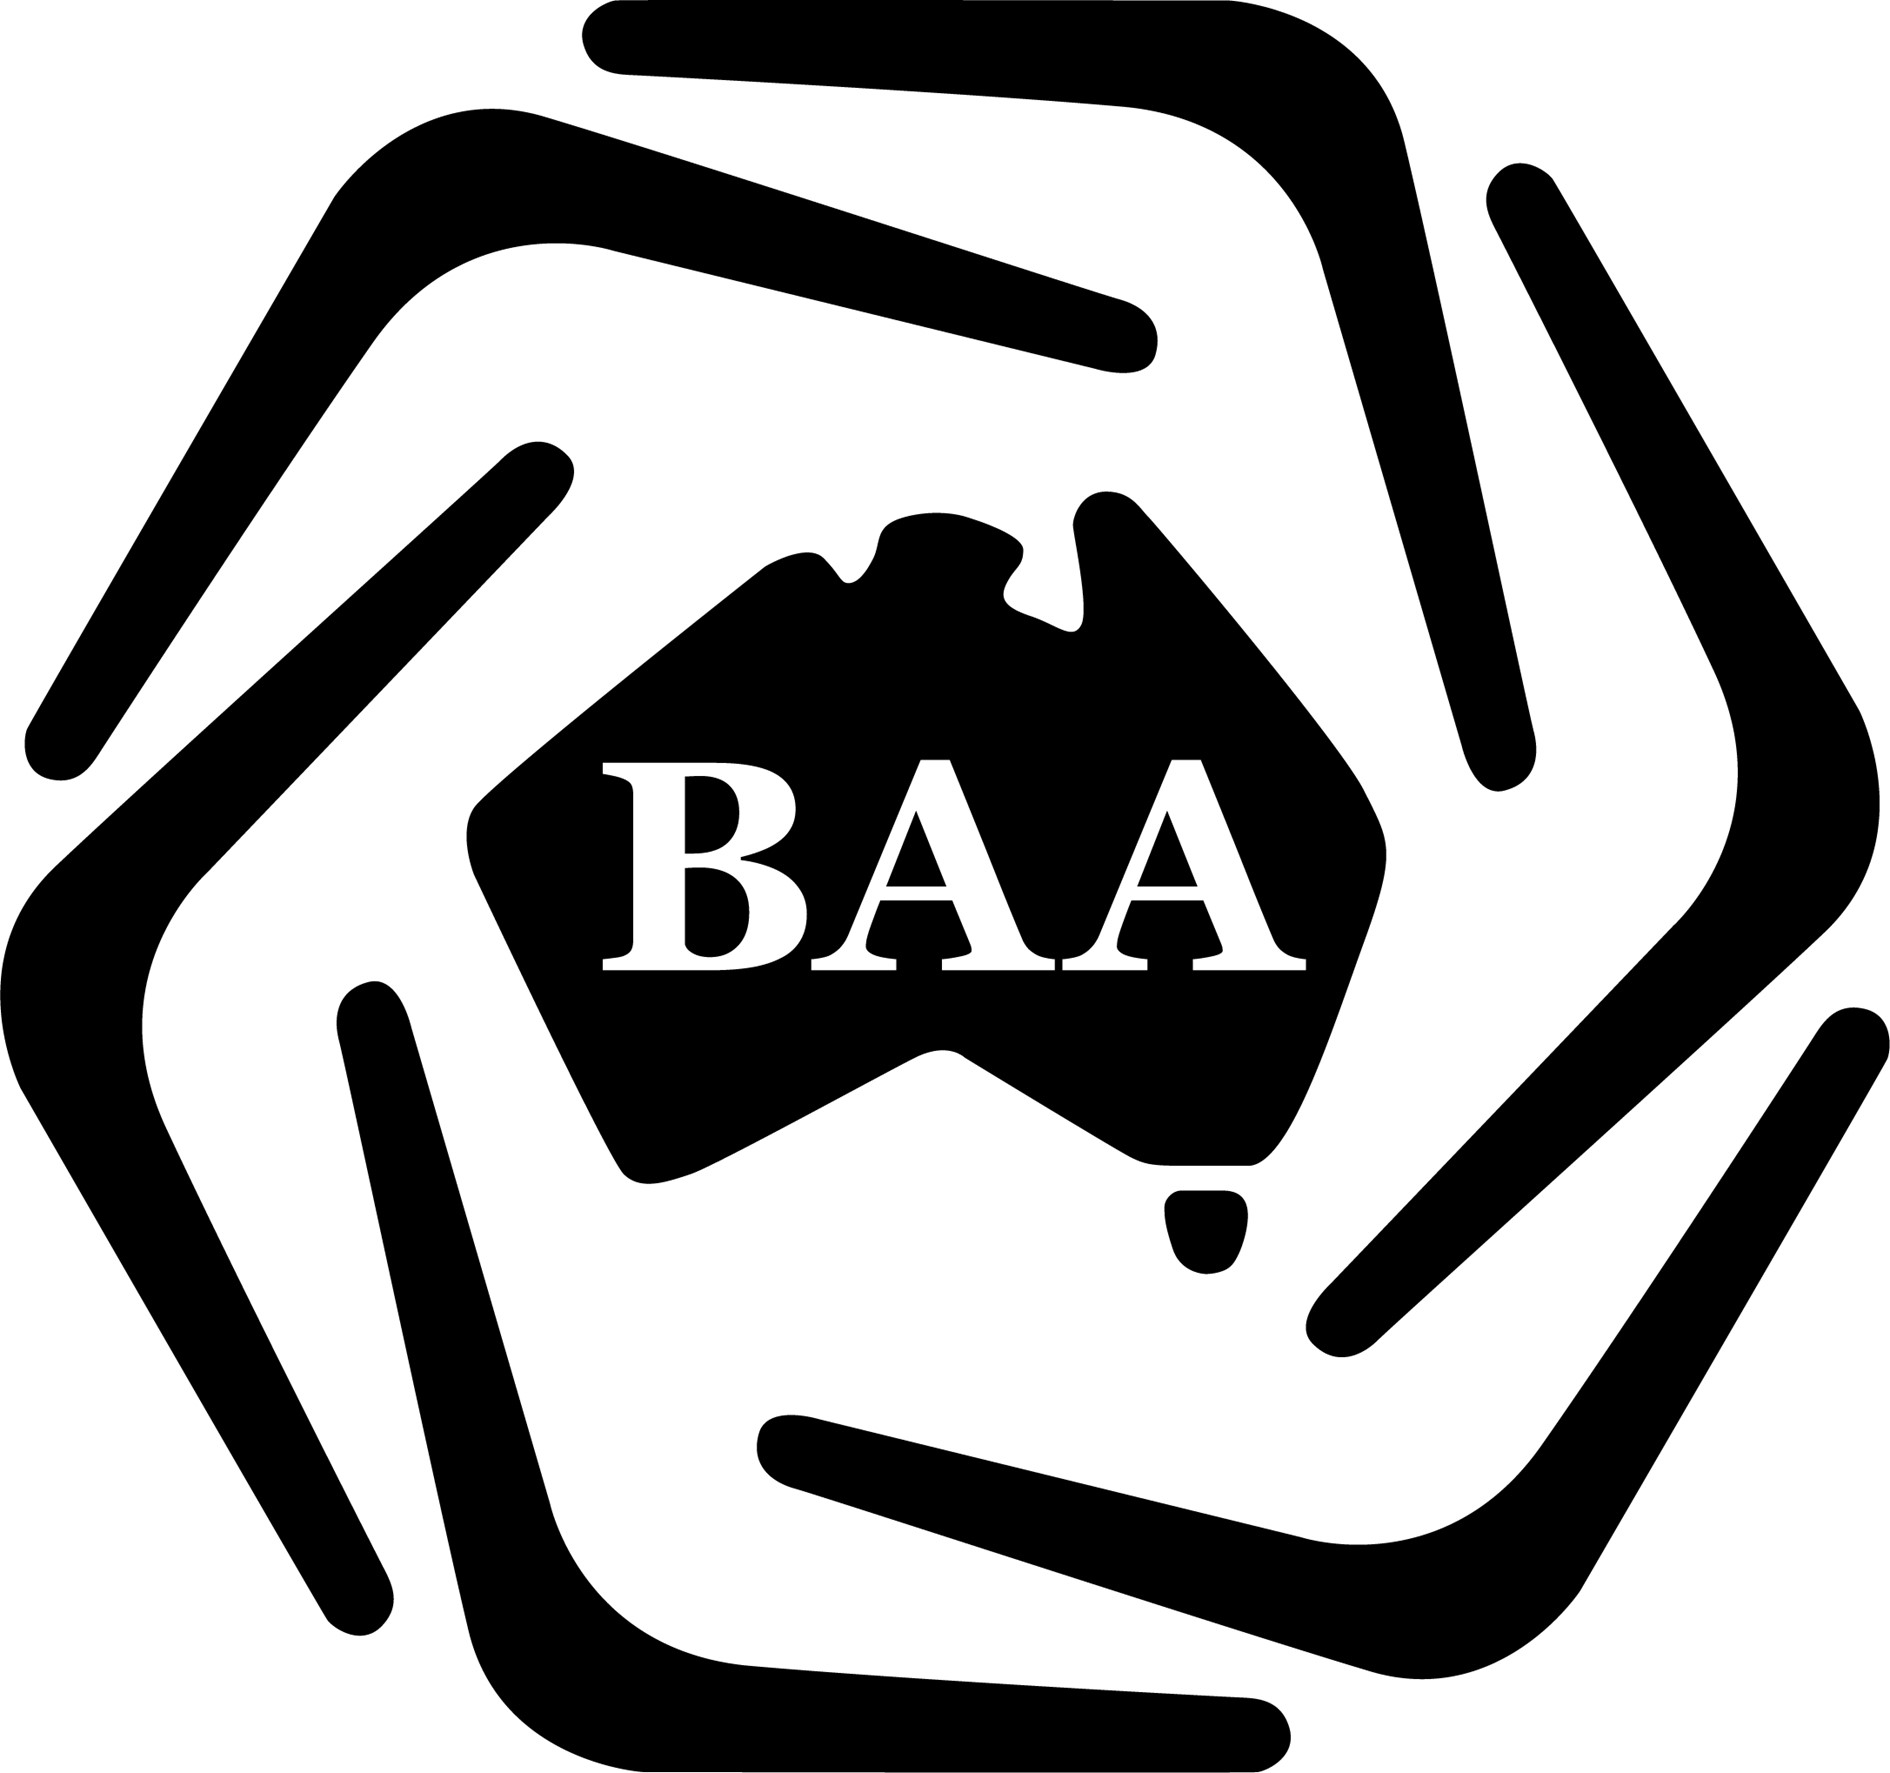 Boomerang Association of Australia (BAA)